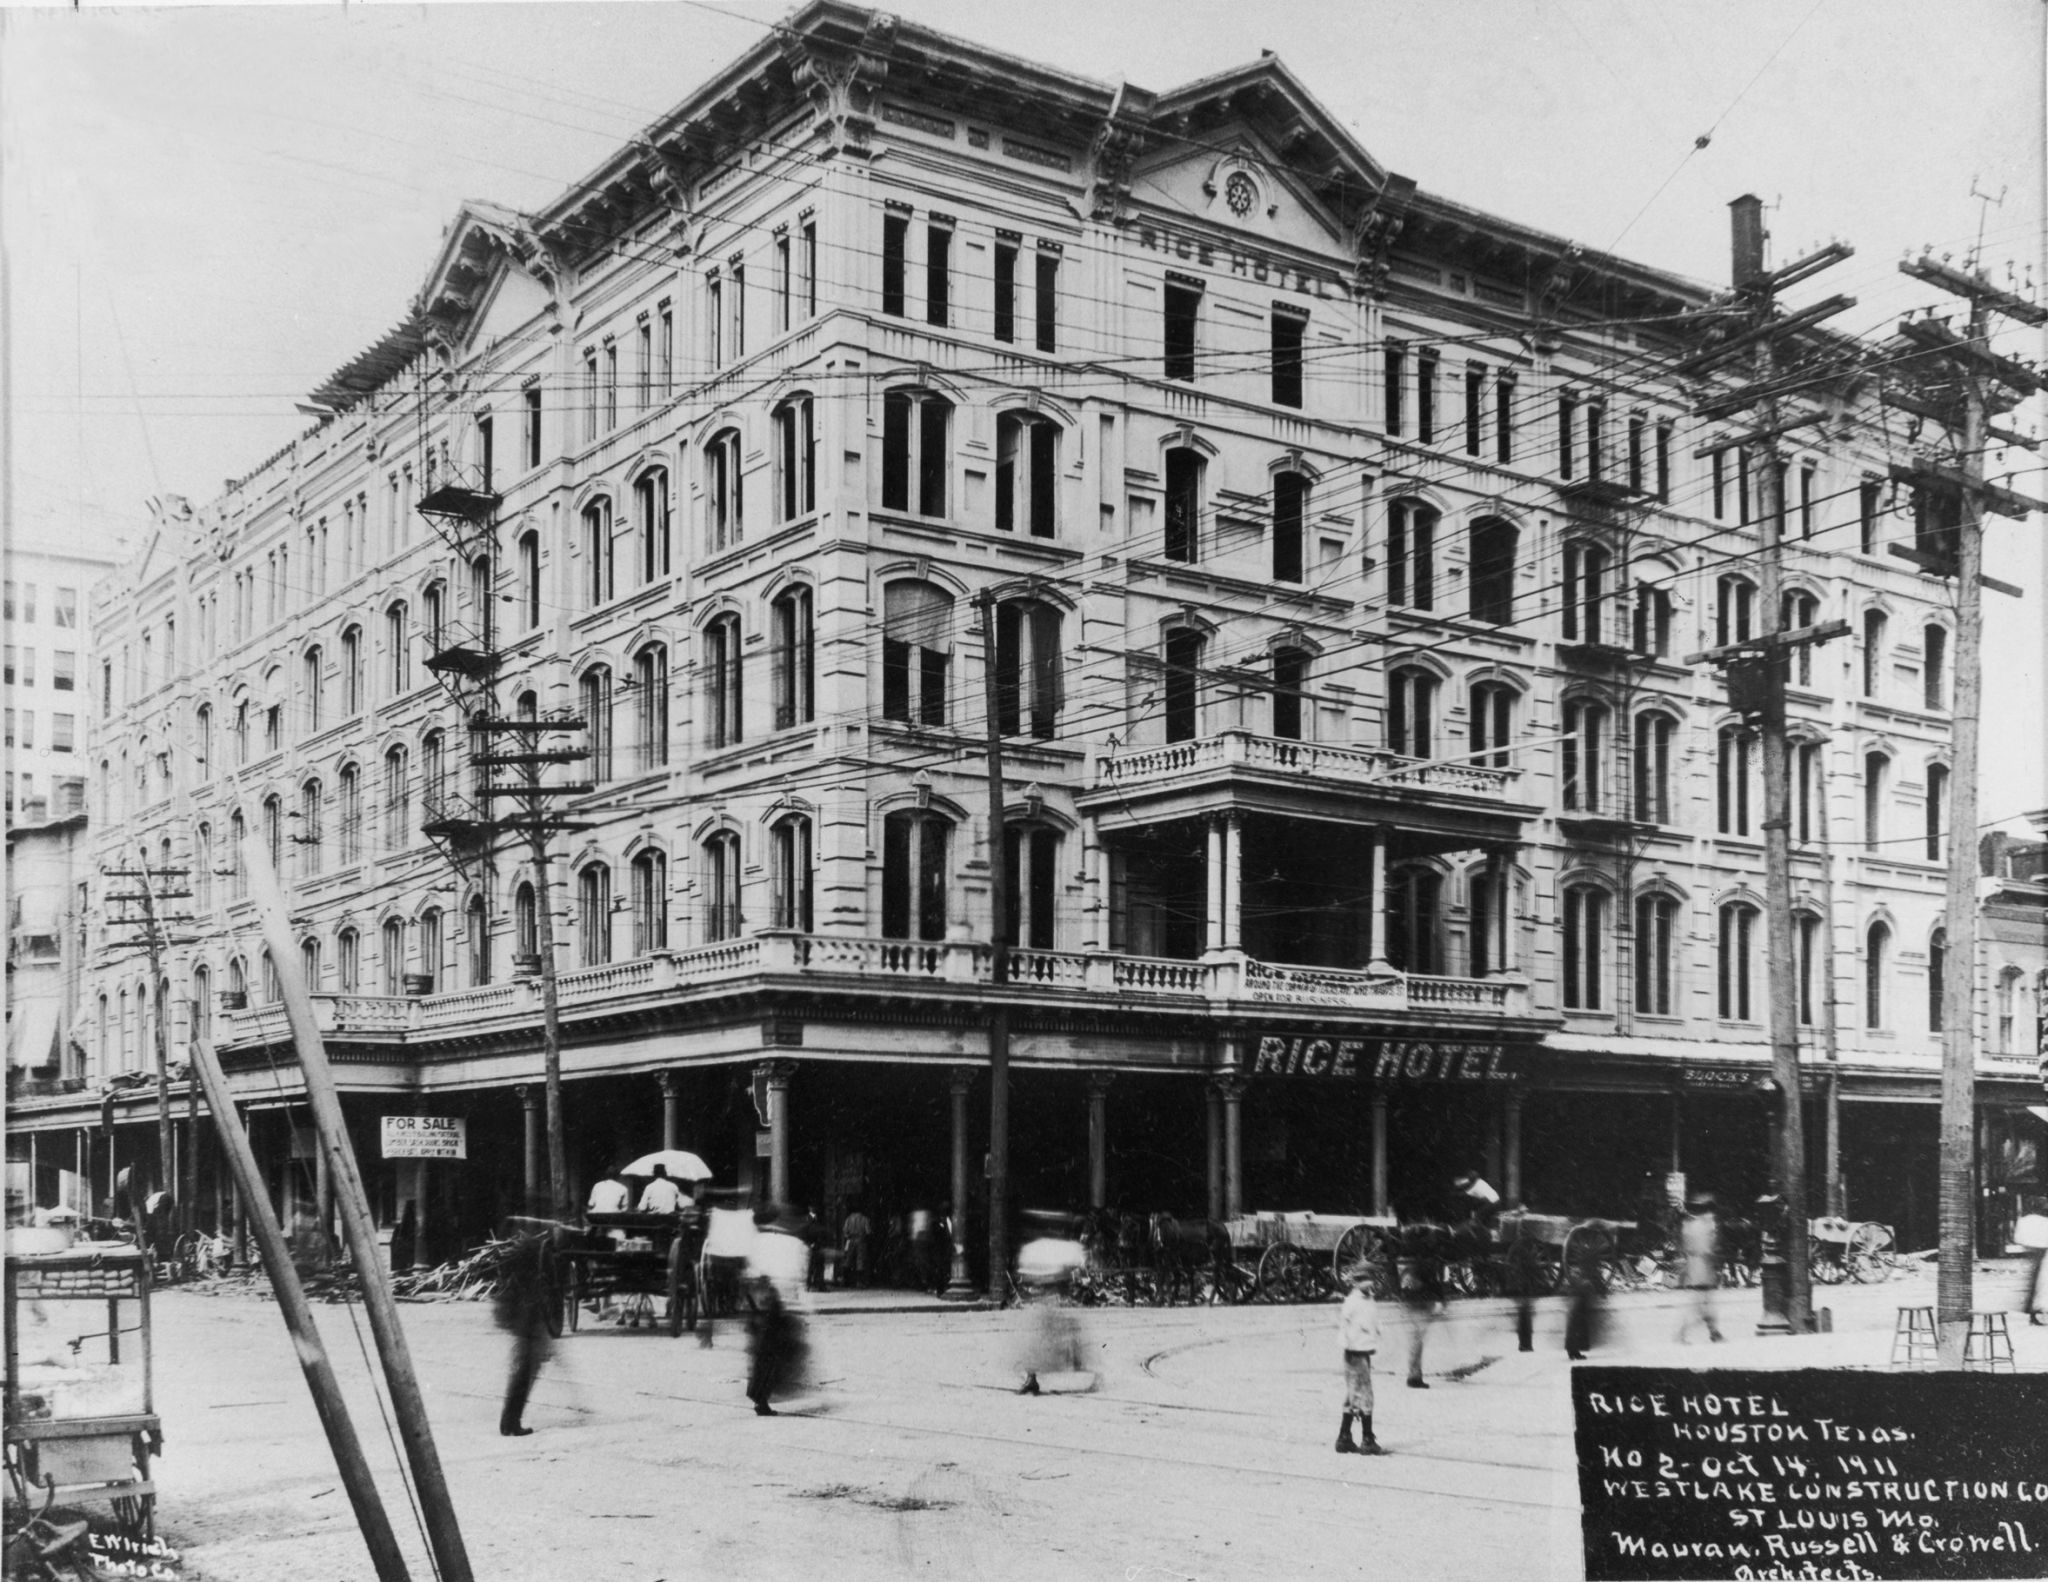 The history of Houston's Rice Hotel